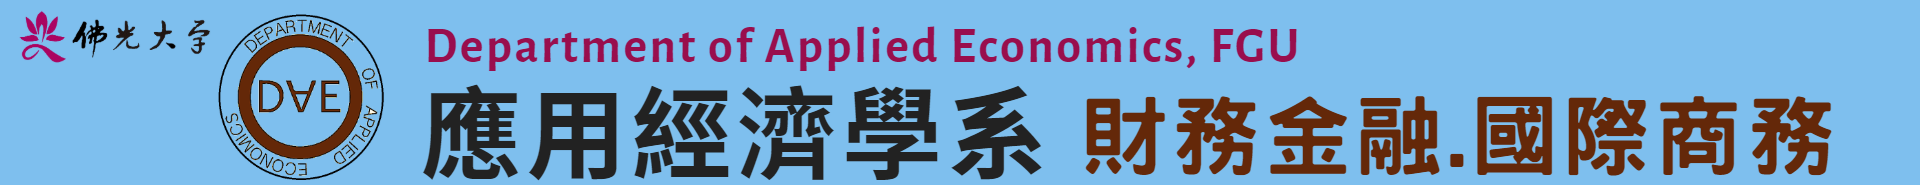 佛光大学应用经济学系 Department of Applied Economics,FGU 的Logo